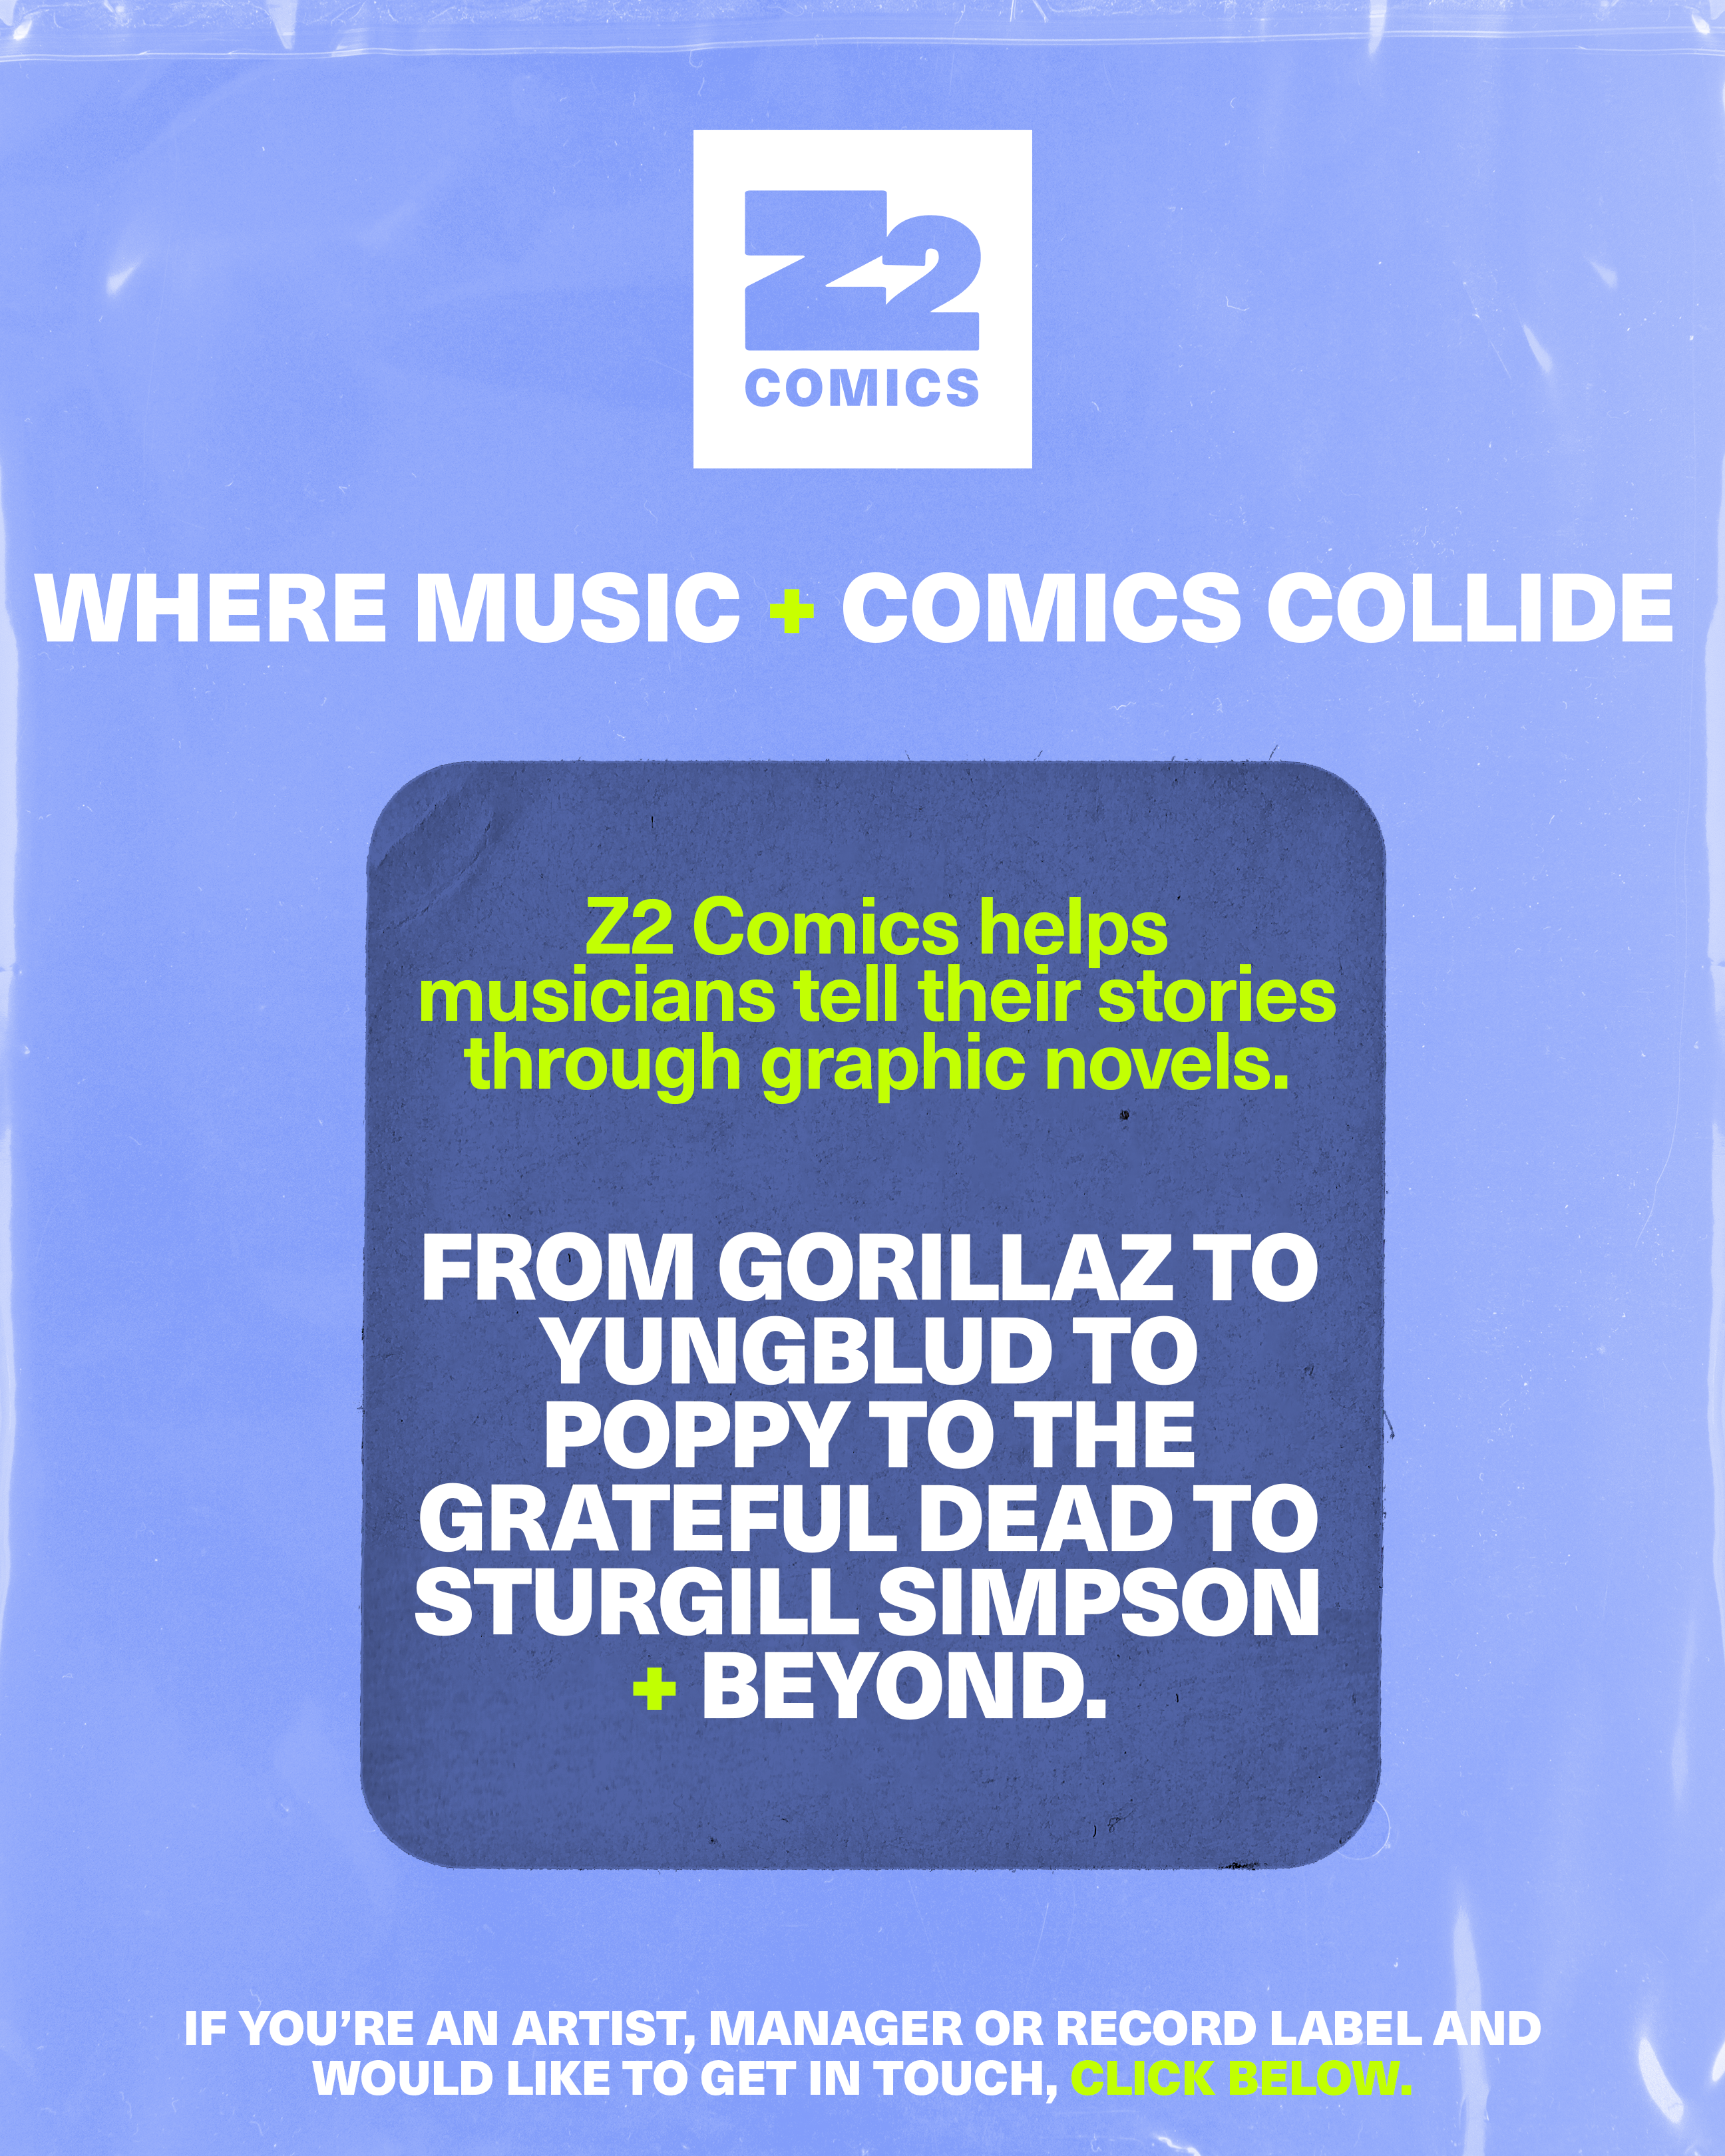 About Z2 Comics